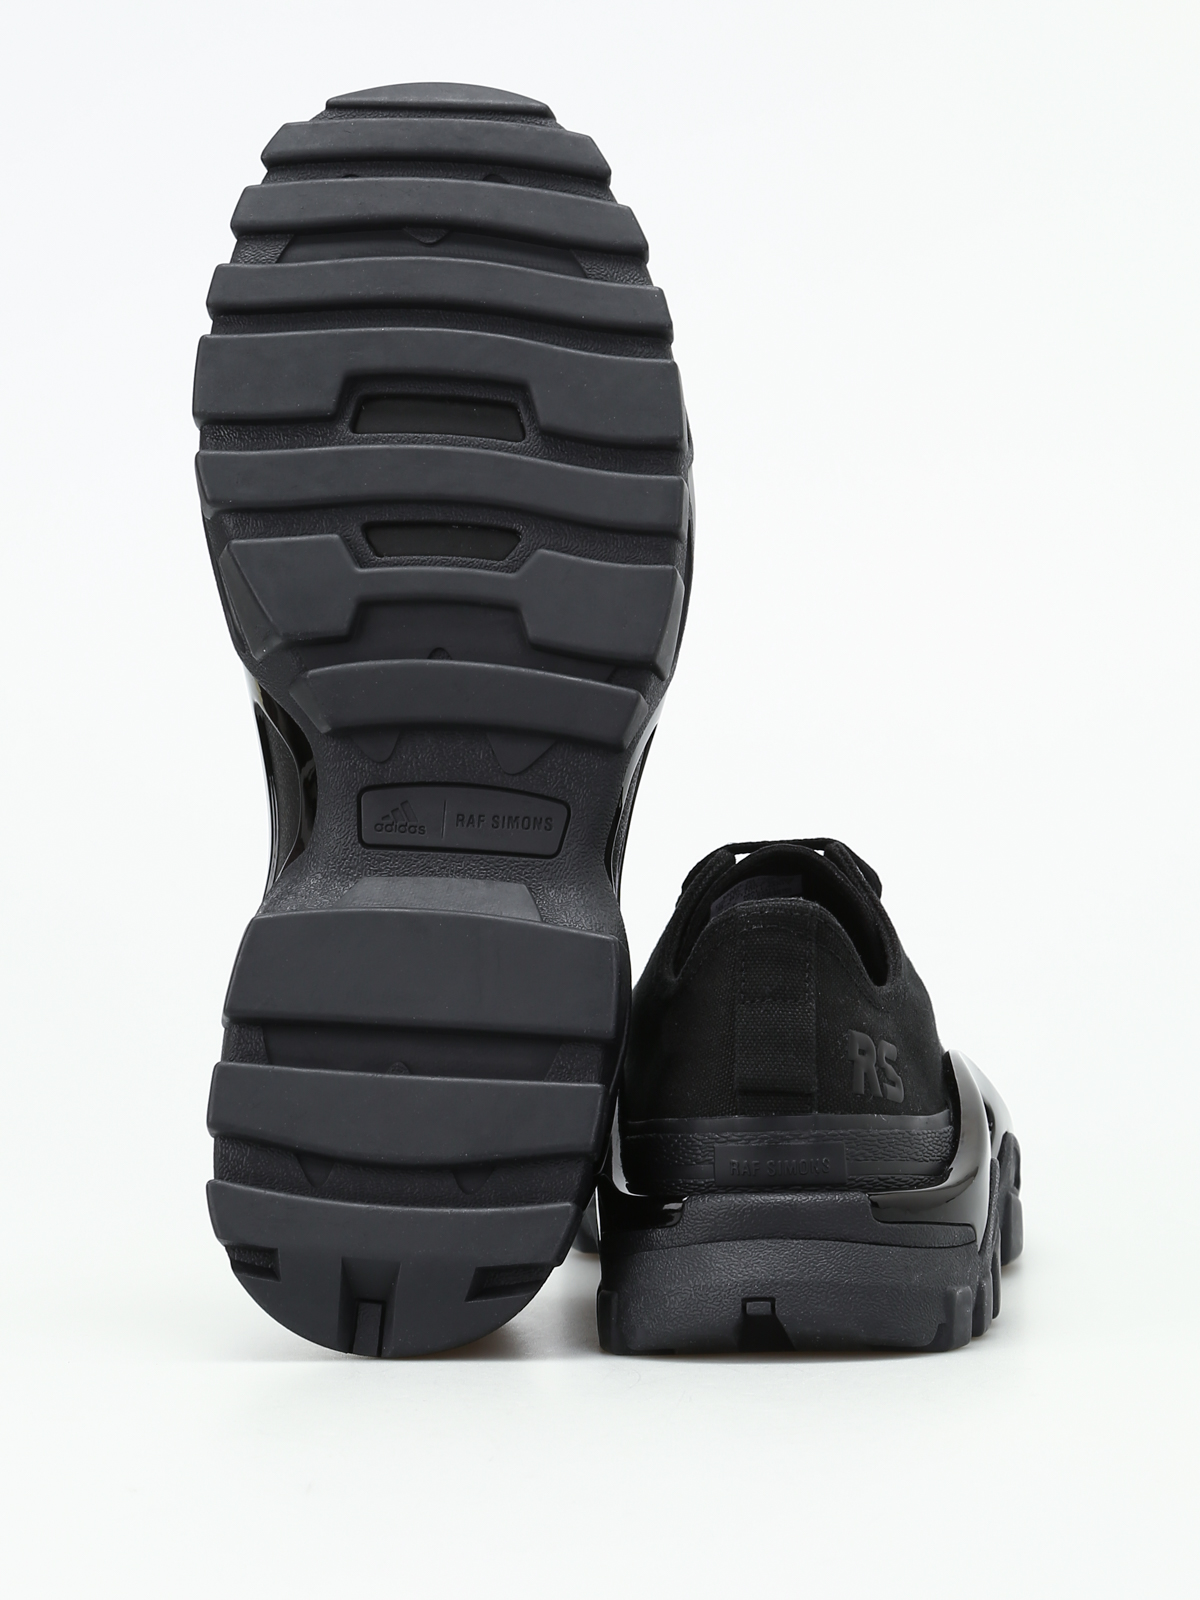 Trainers Adidas - new shoes - DA9297CBLAKCBLACK